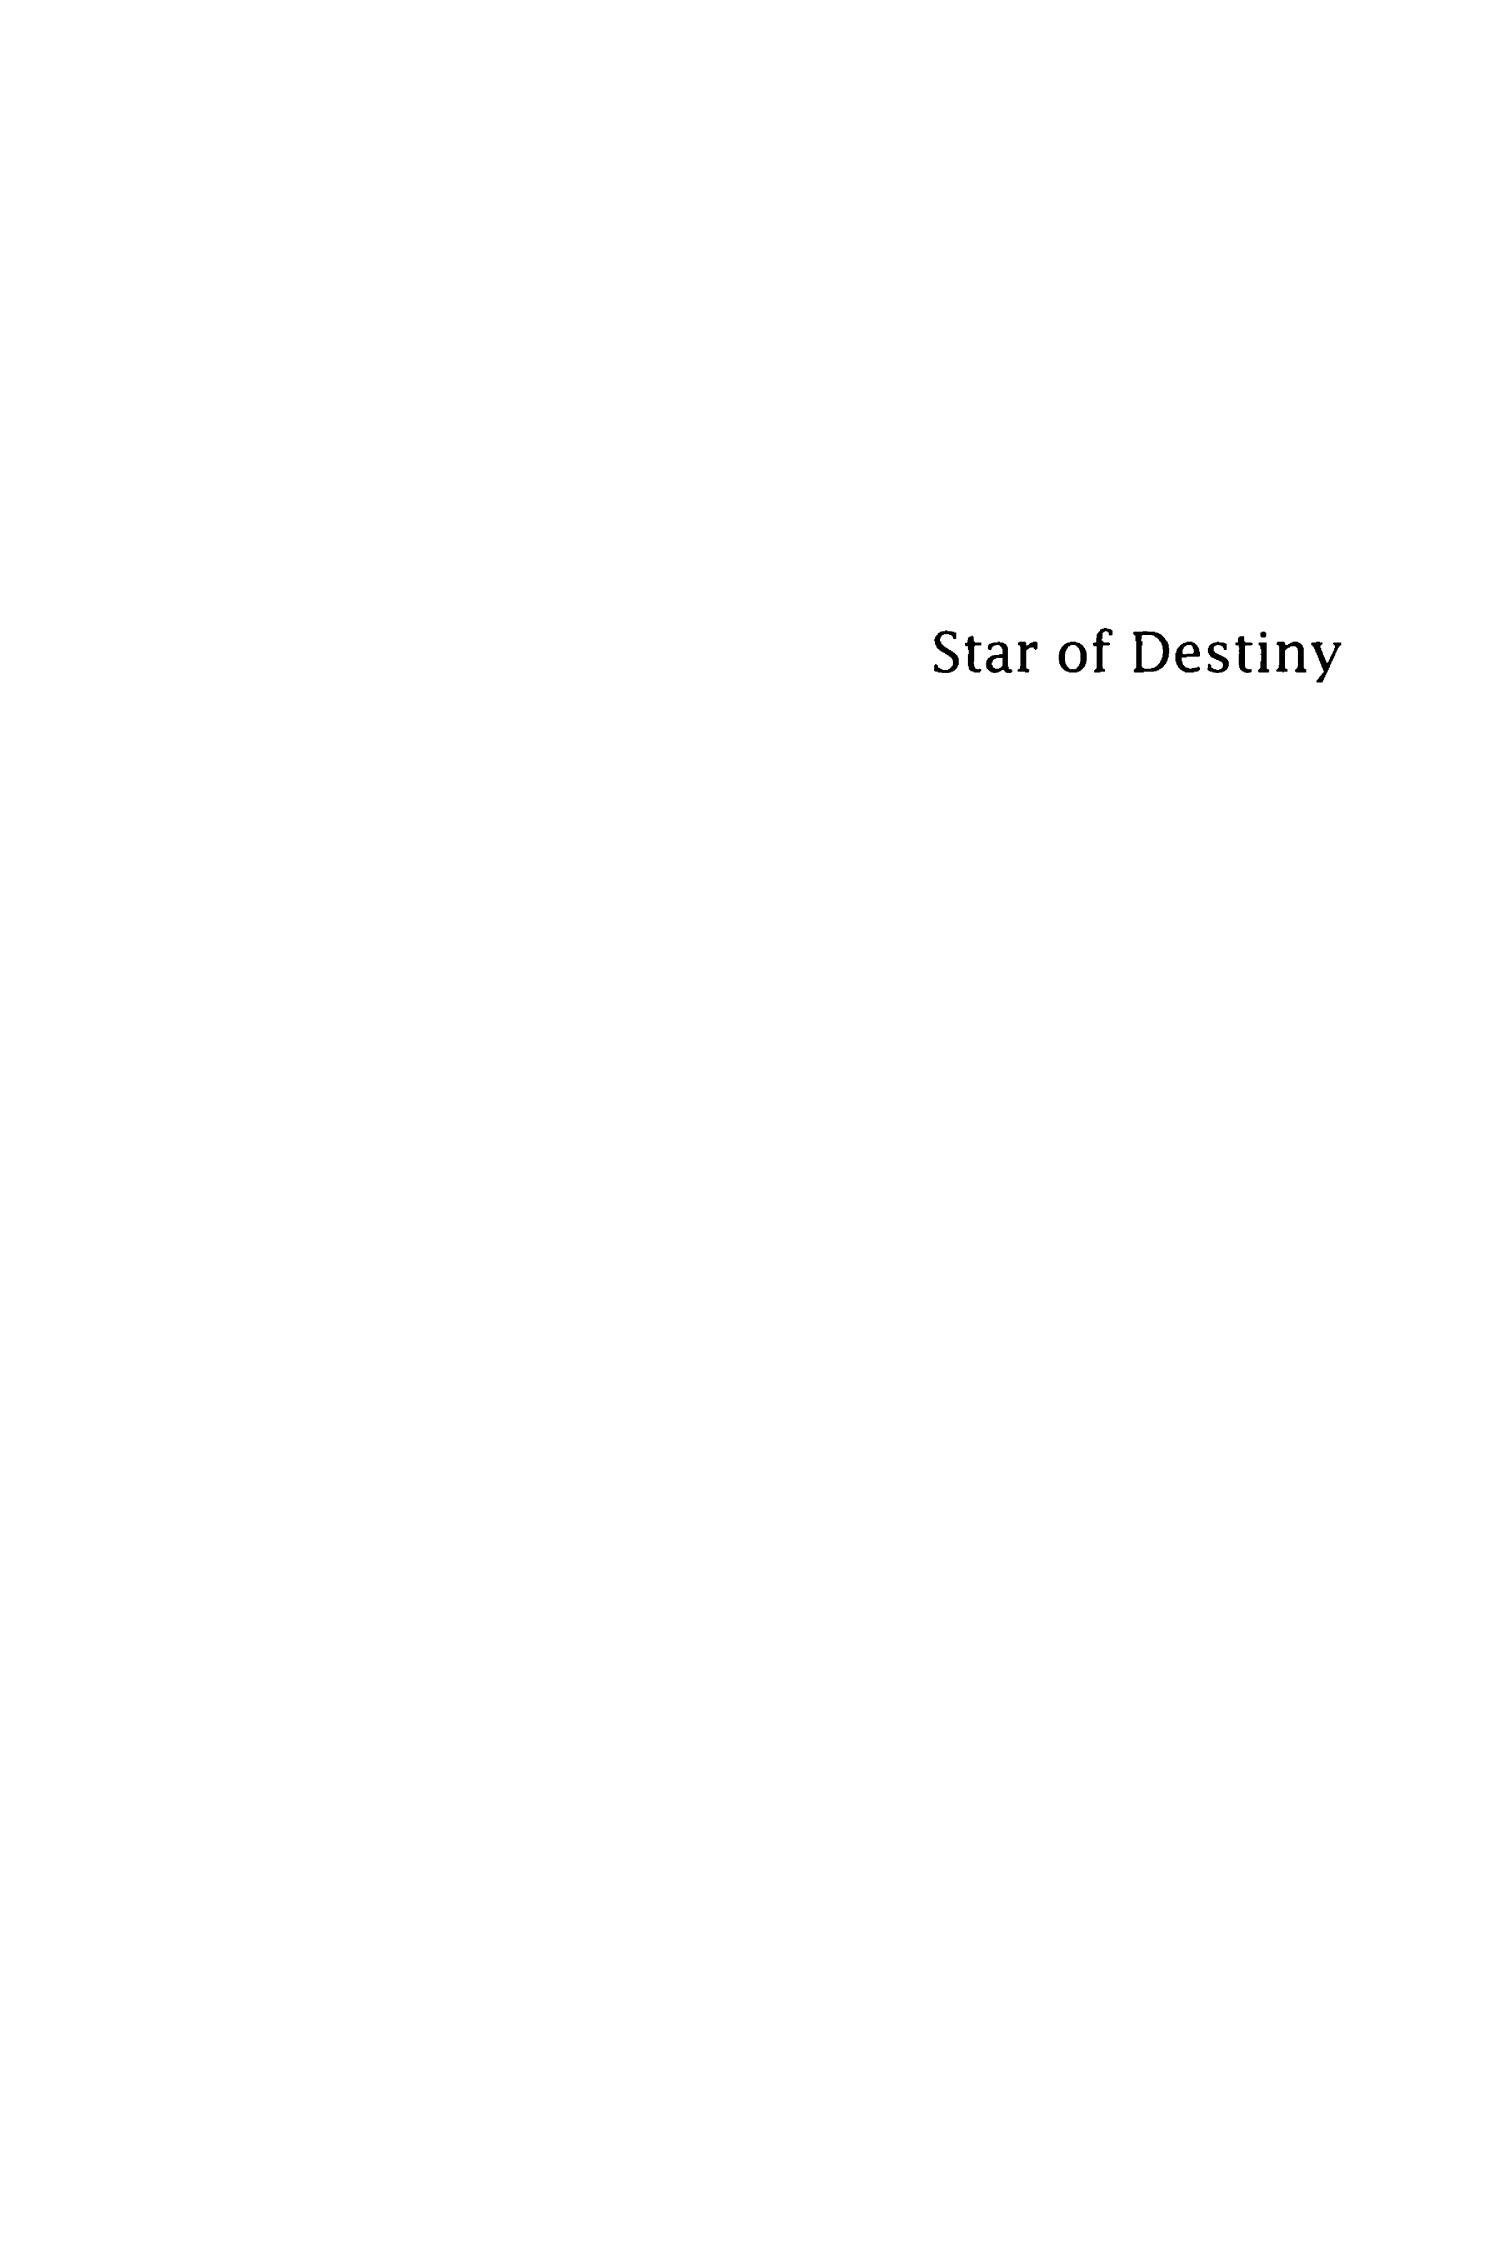 Star of Destiny: The Private Life of Sam and Margaret Houston
                                                
                                                    i
                                                